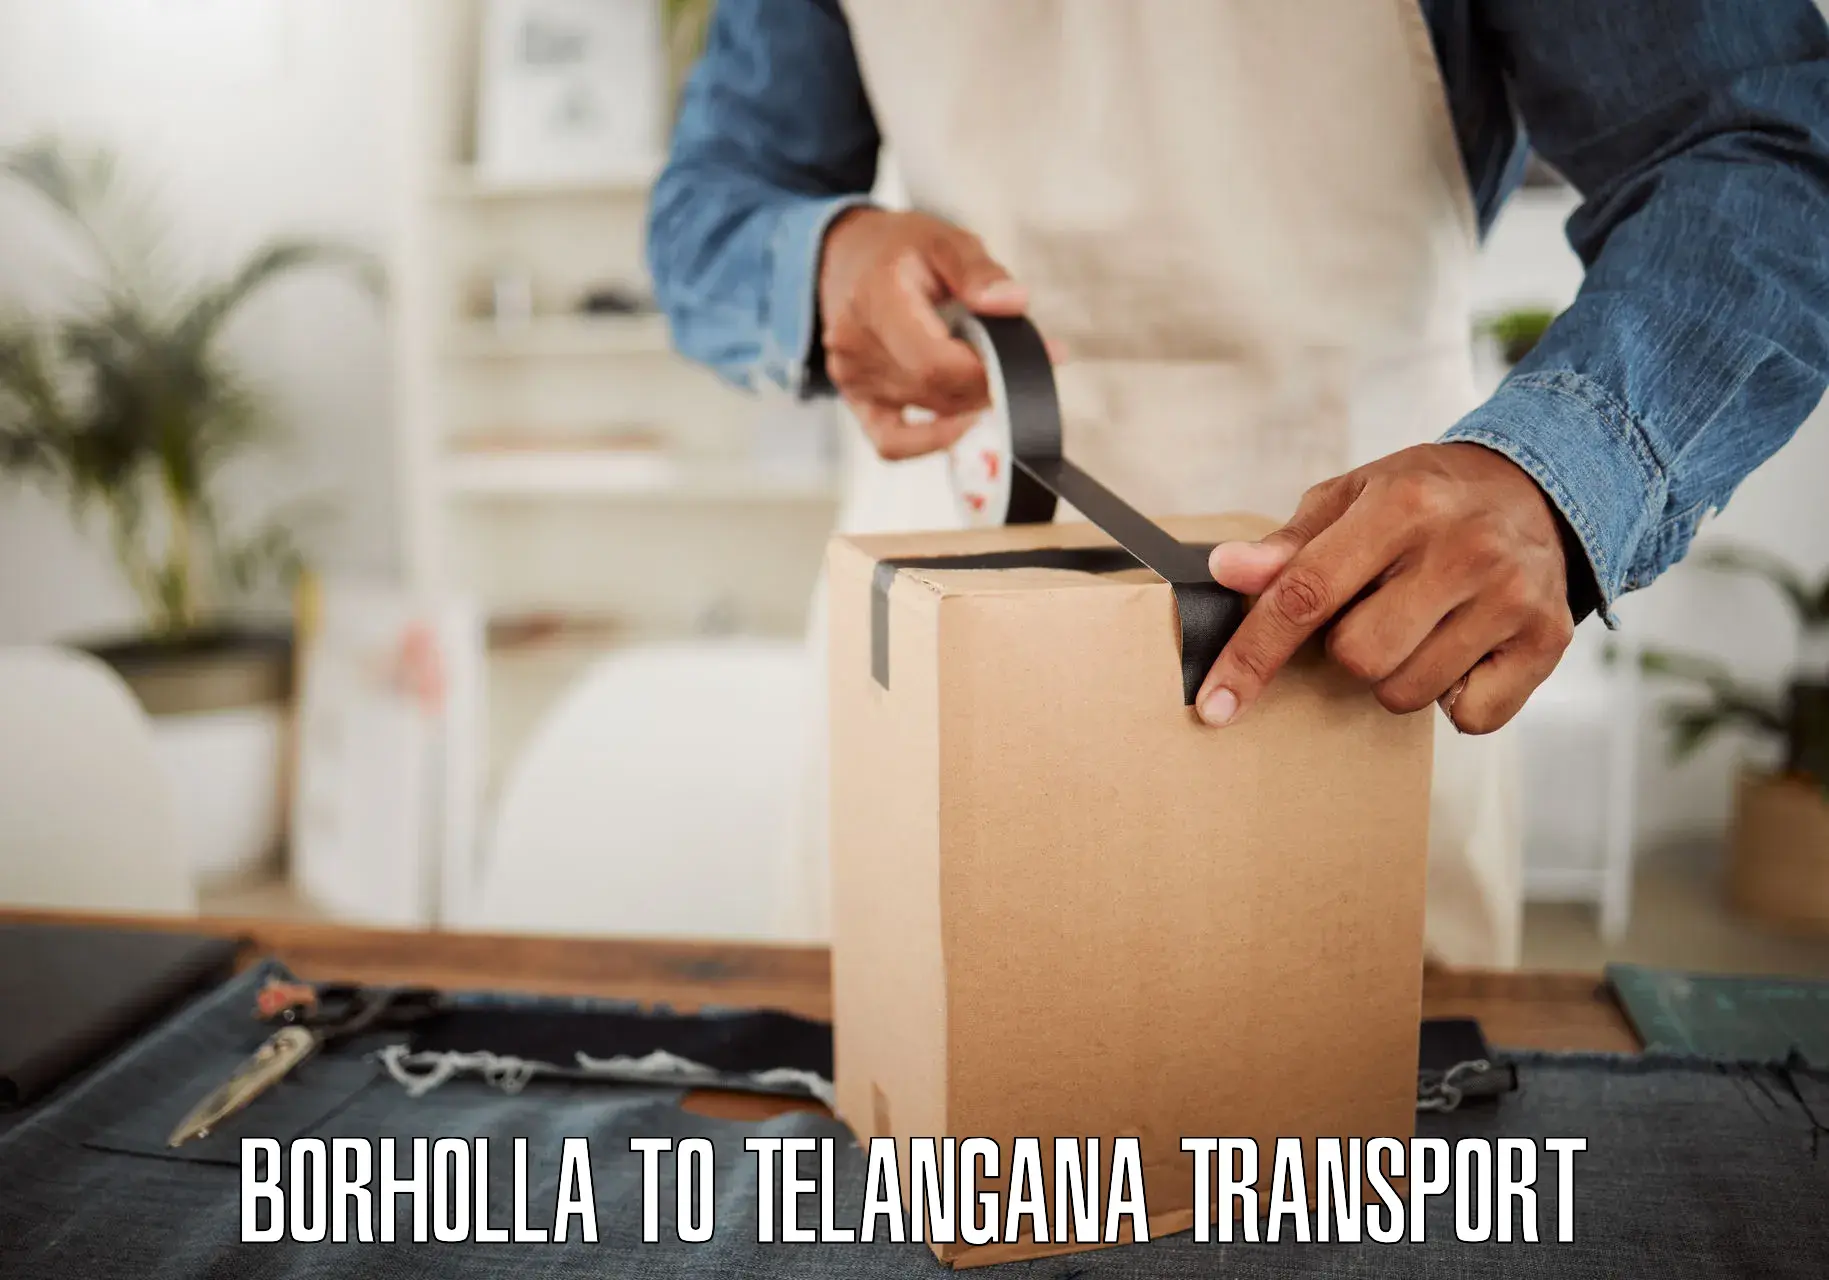 Transport in sharing Borholla to Odela